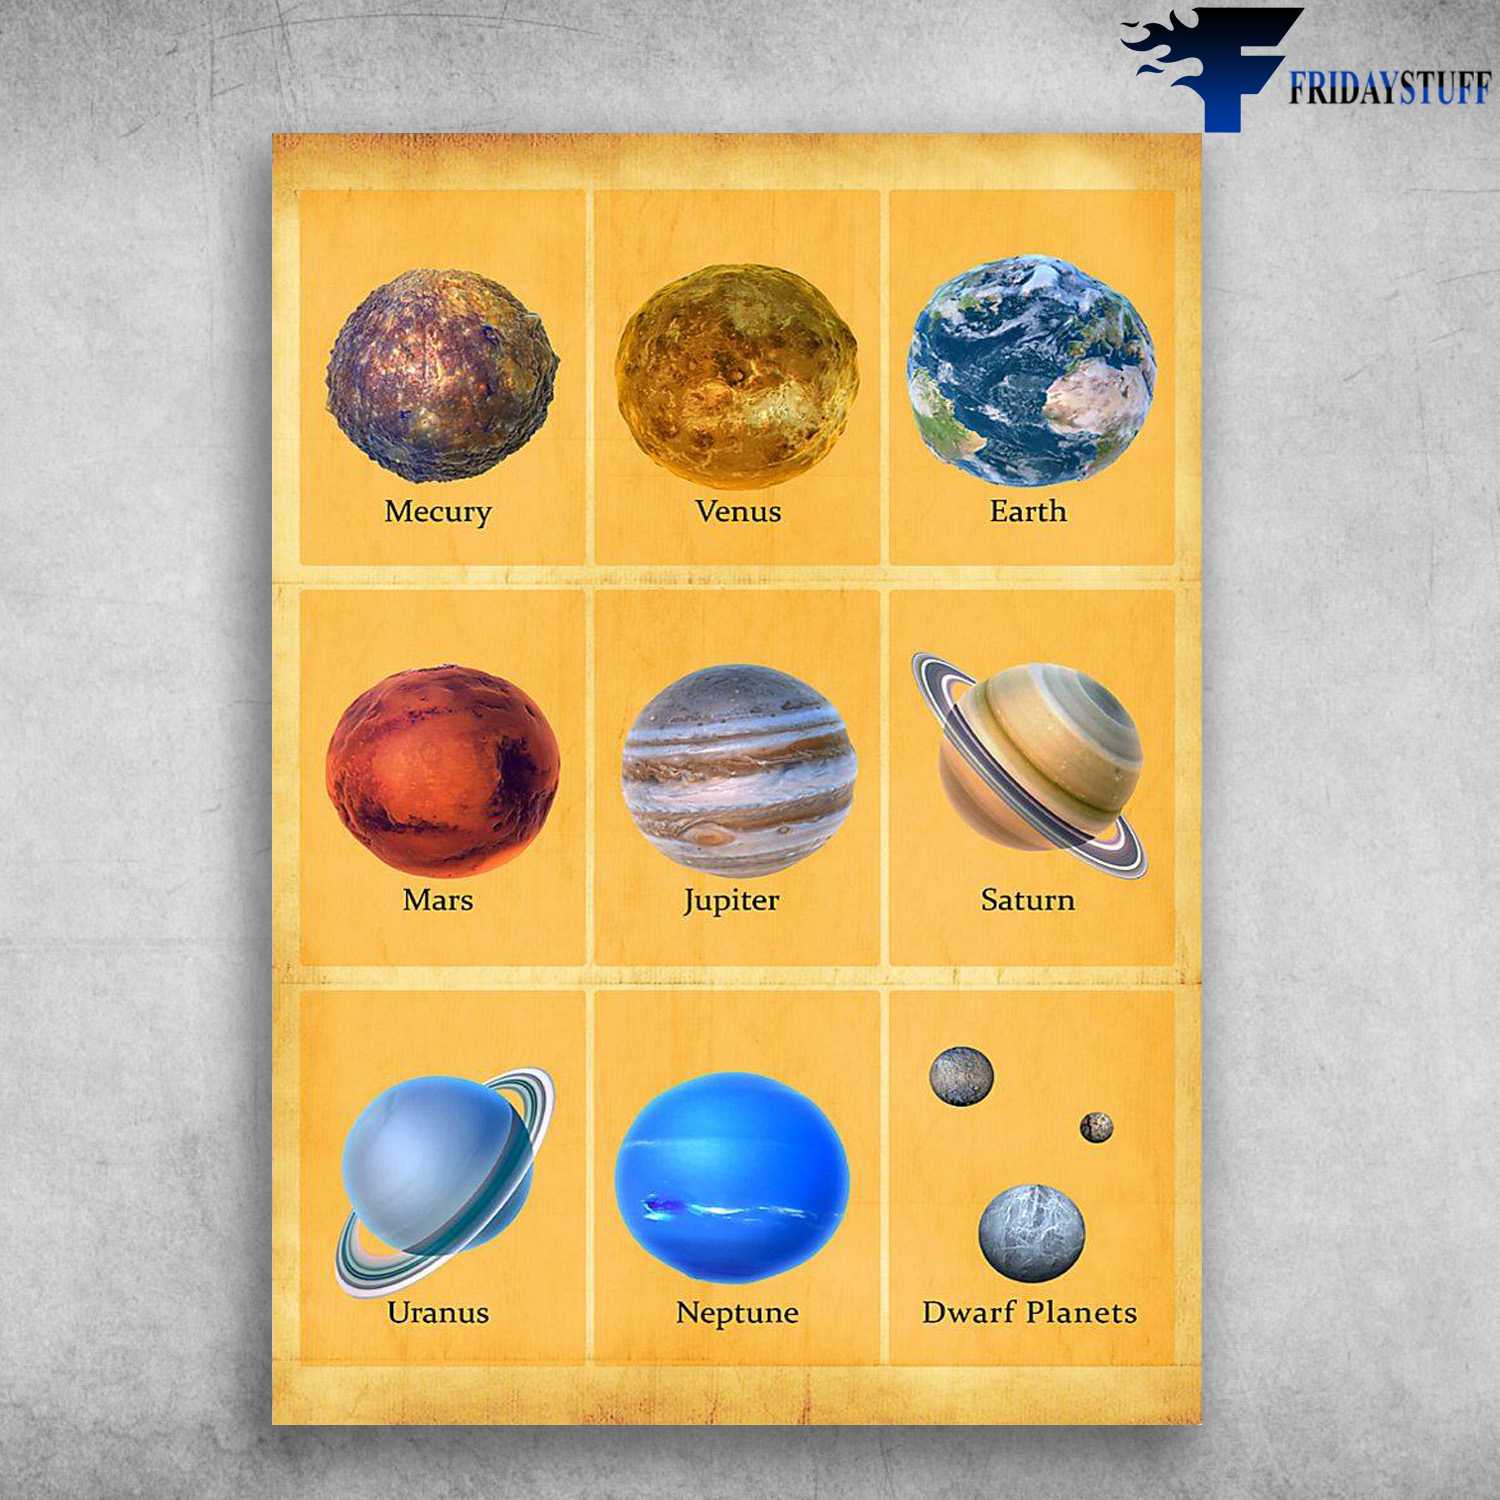 Planets In The Solar System - Mecury, Venus, Earth, Mars, Jupiter, Saturn, Uranus, Neptune, Dwarf Planets